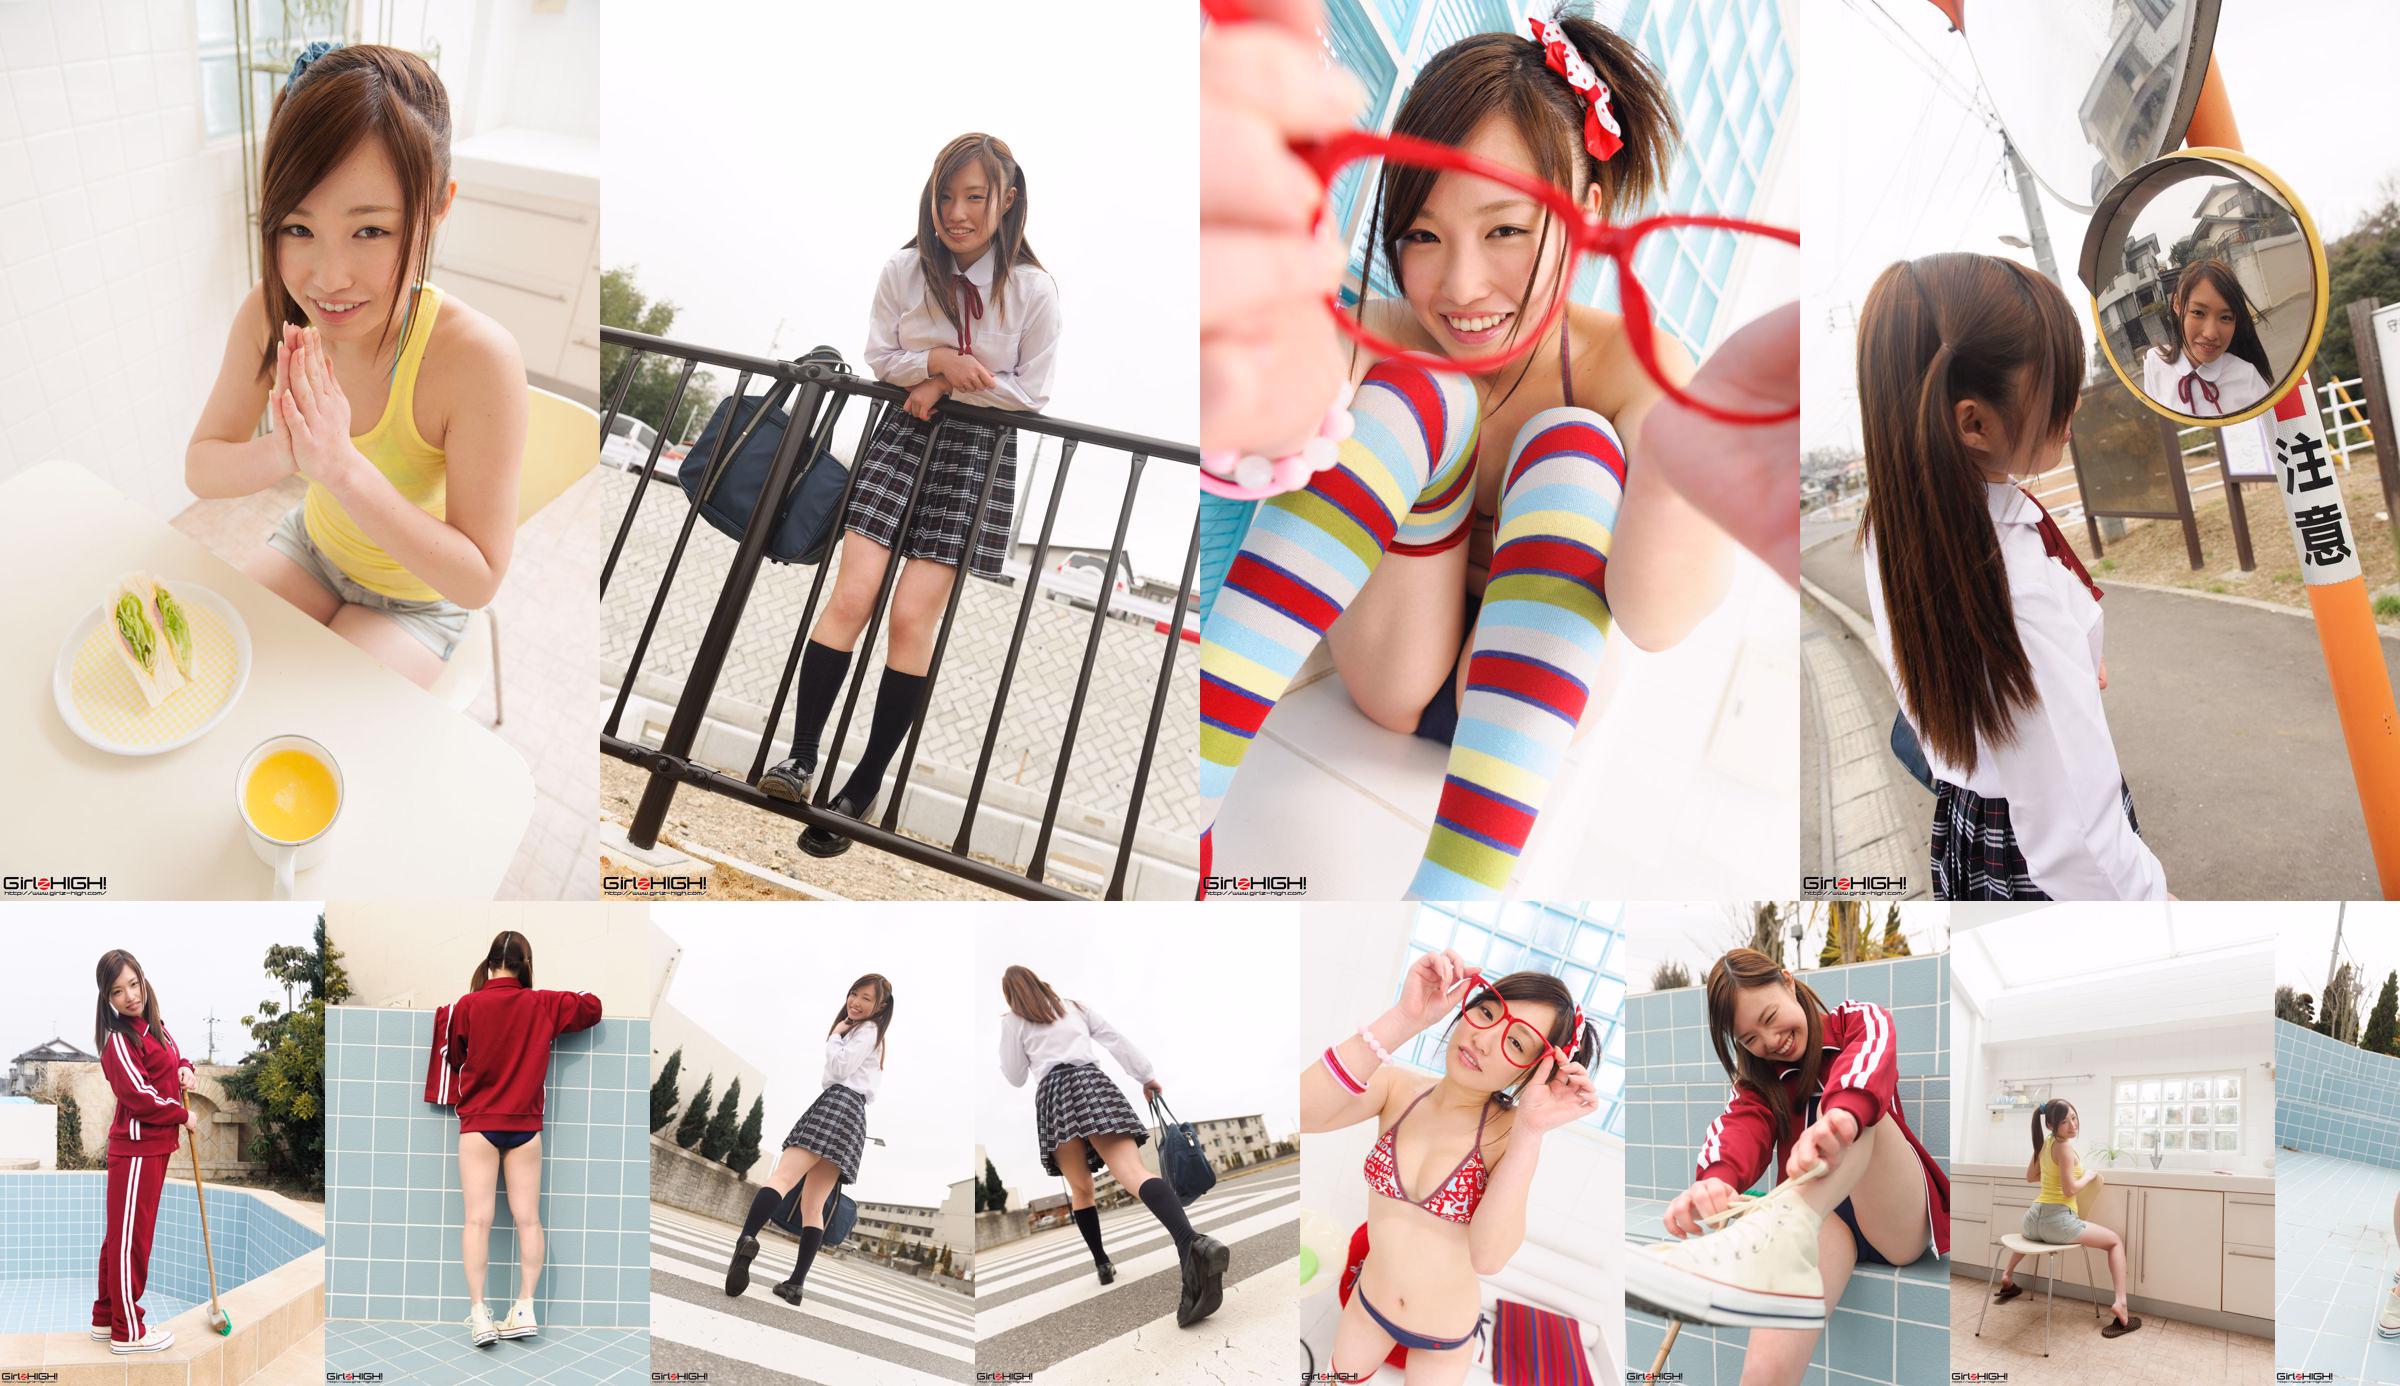 [Girlz-High] Yuno Natsuki Yuno Natsuki / Yuno Natsuki Gravure Gallery-g023 Photoset 03 No.100766 Pagina 1